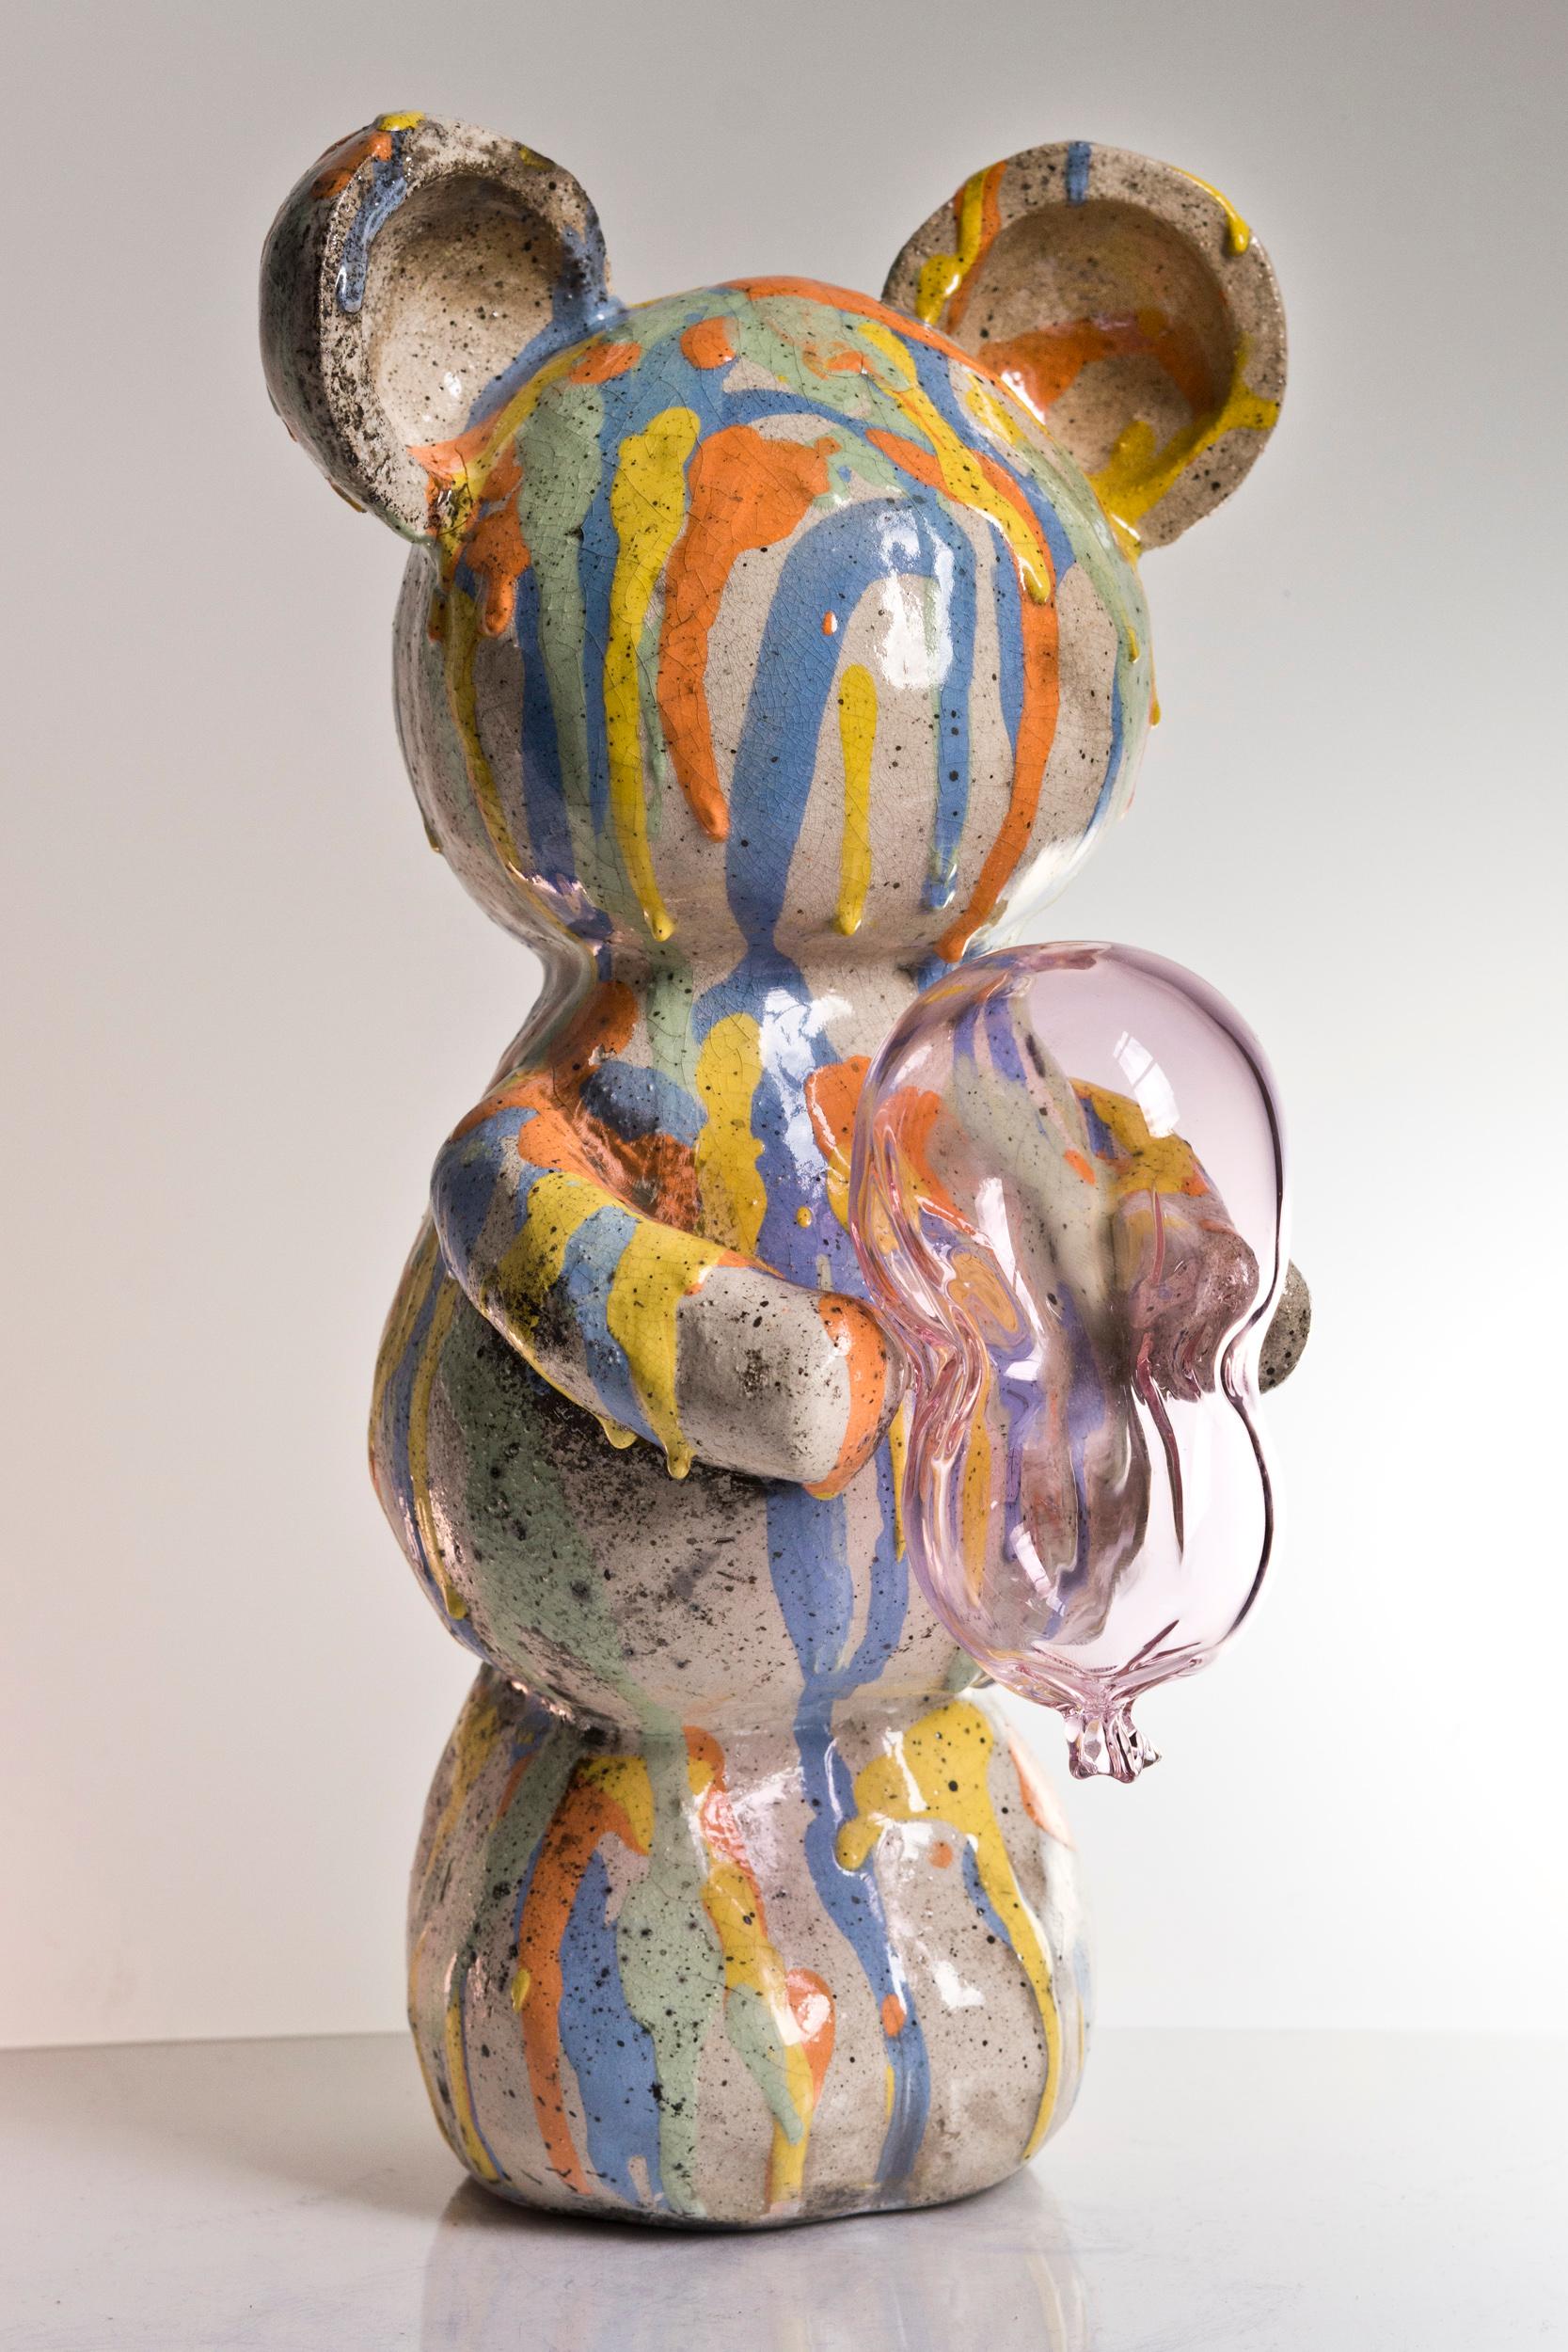 Agustina Garrigou Figurative Sculpture - The Messy Teddy